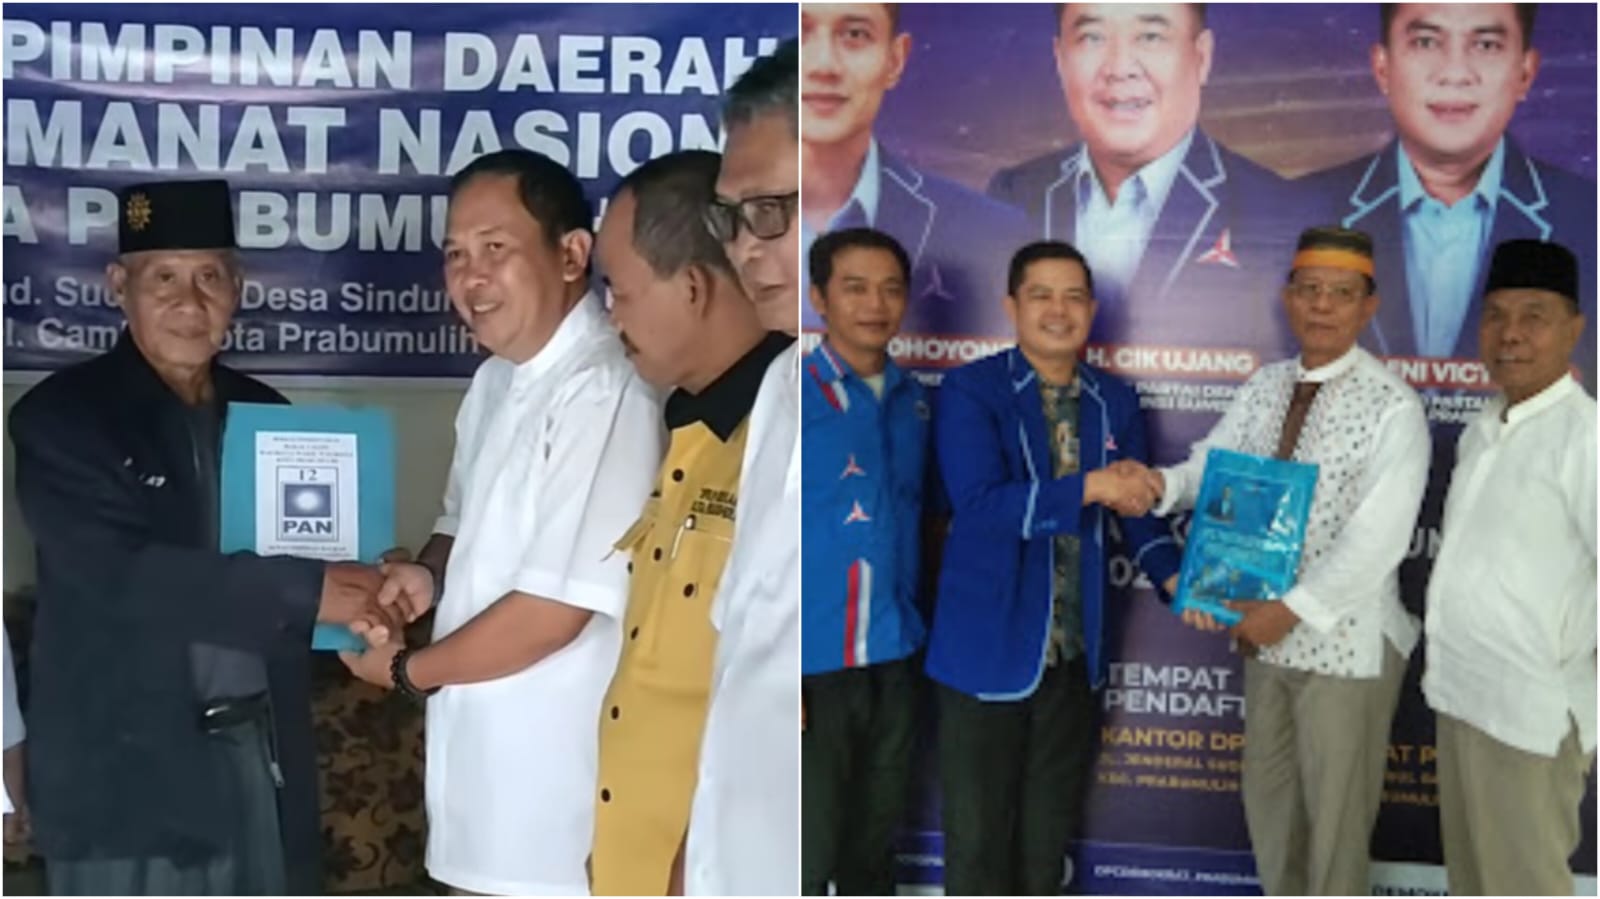 2 Bacalon Walikota Prabumulih Datang Langsung Ambil Formulir Pendaftaran : Syamdakir Sambangi 4 Partai, Idham 